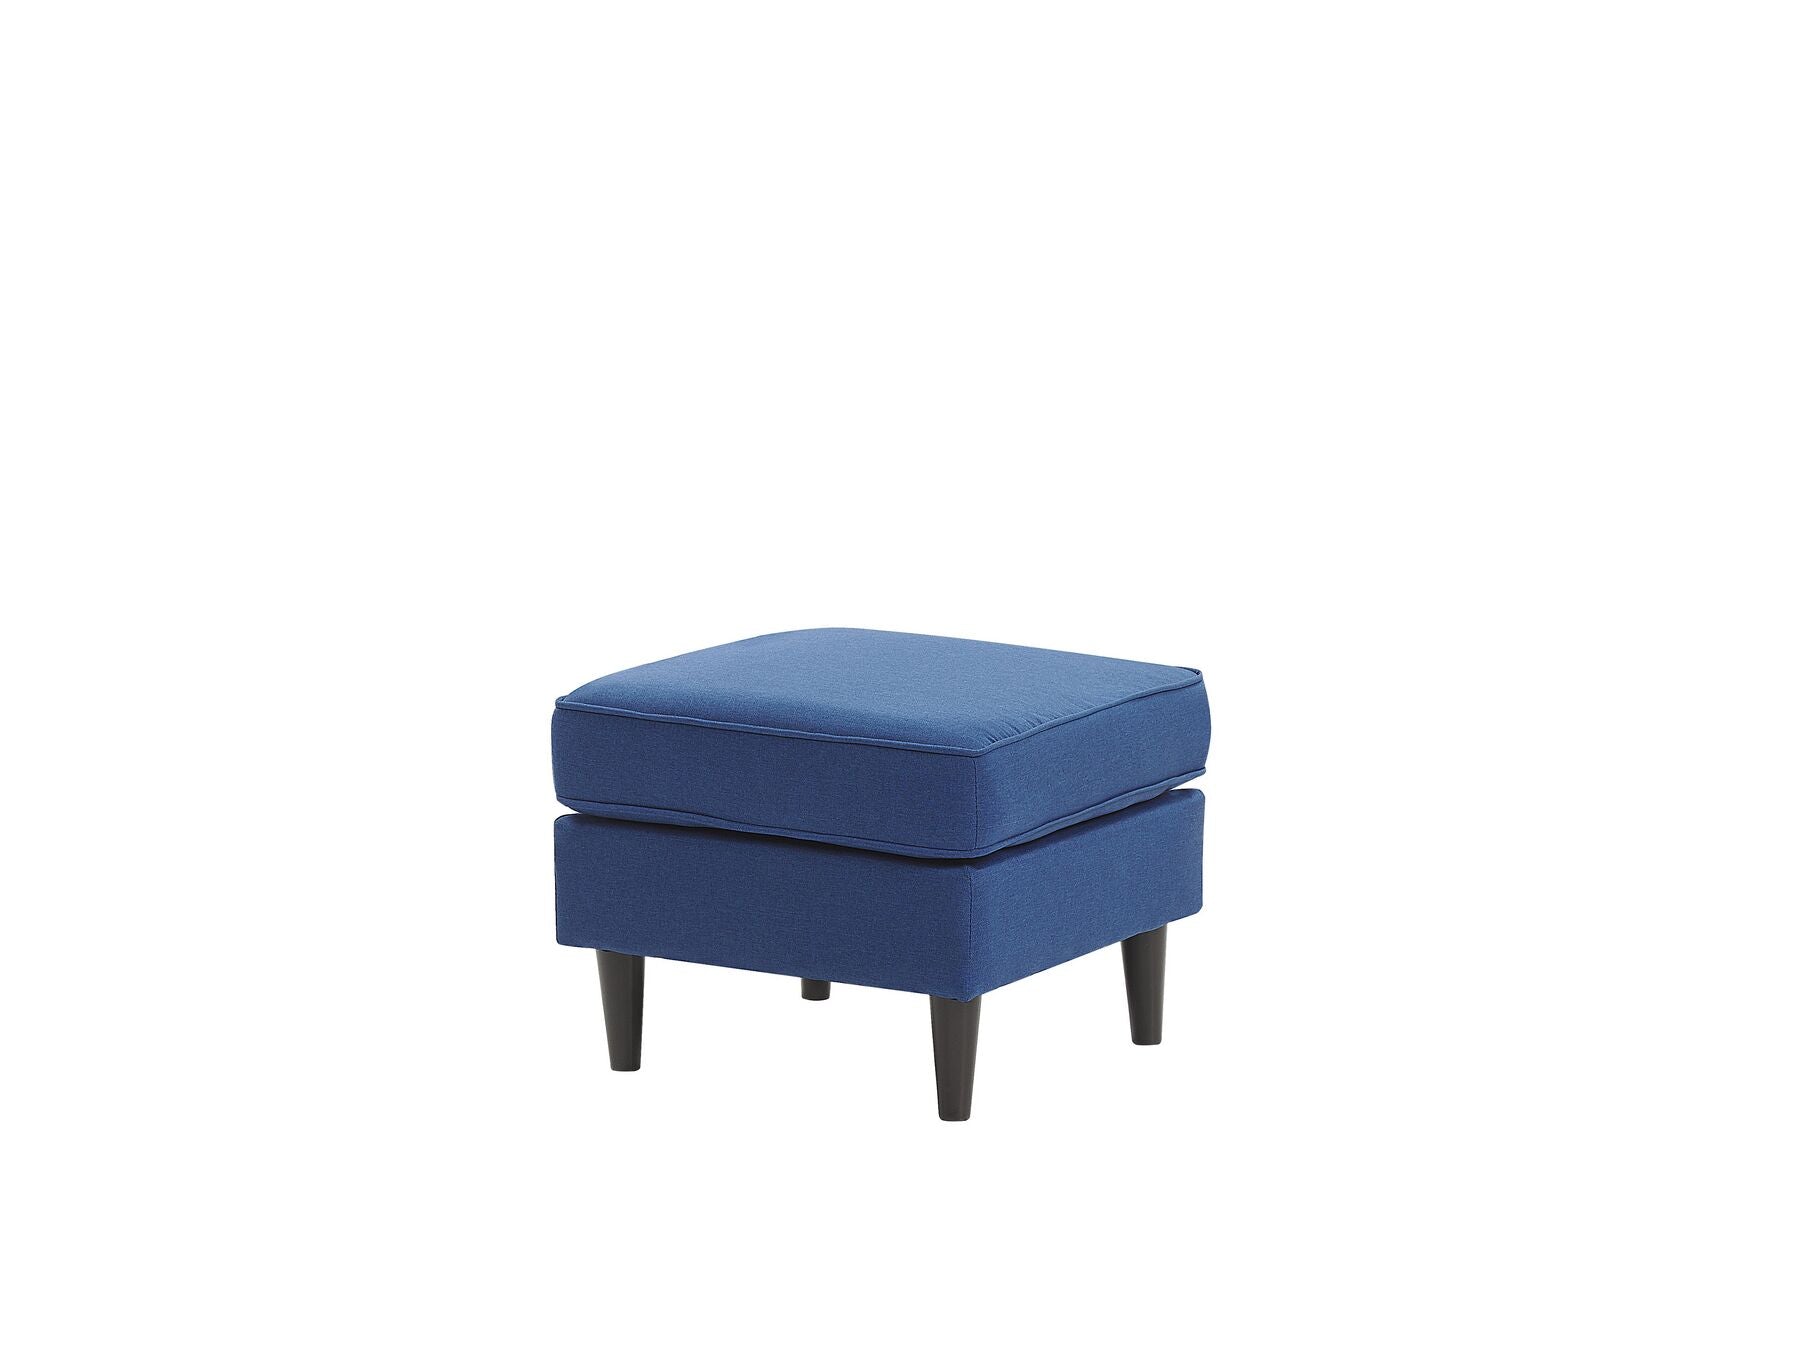 Avesta 3 Seater Fabric Sofa with Ottoman (Blue)